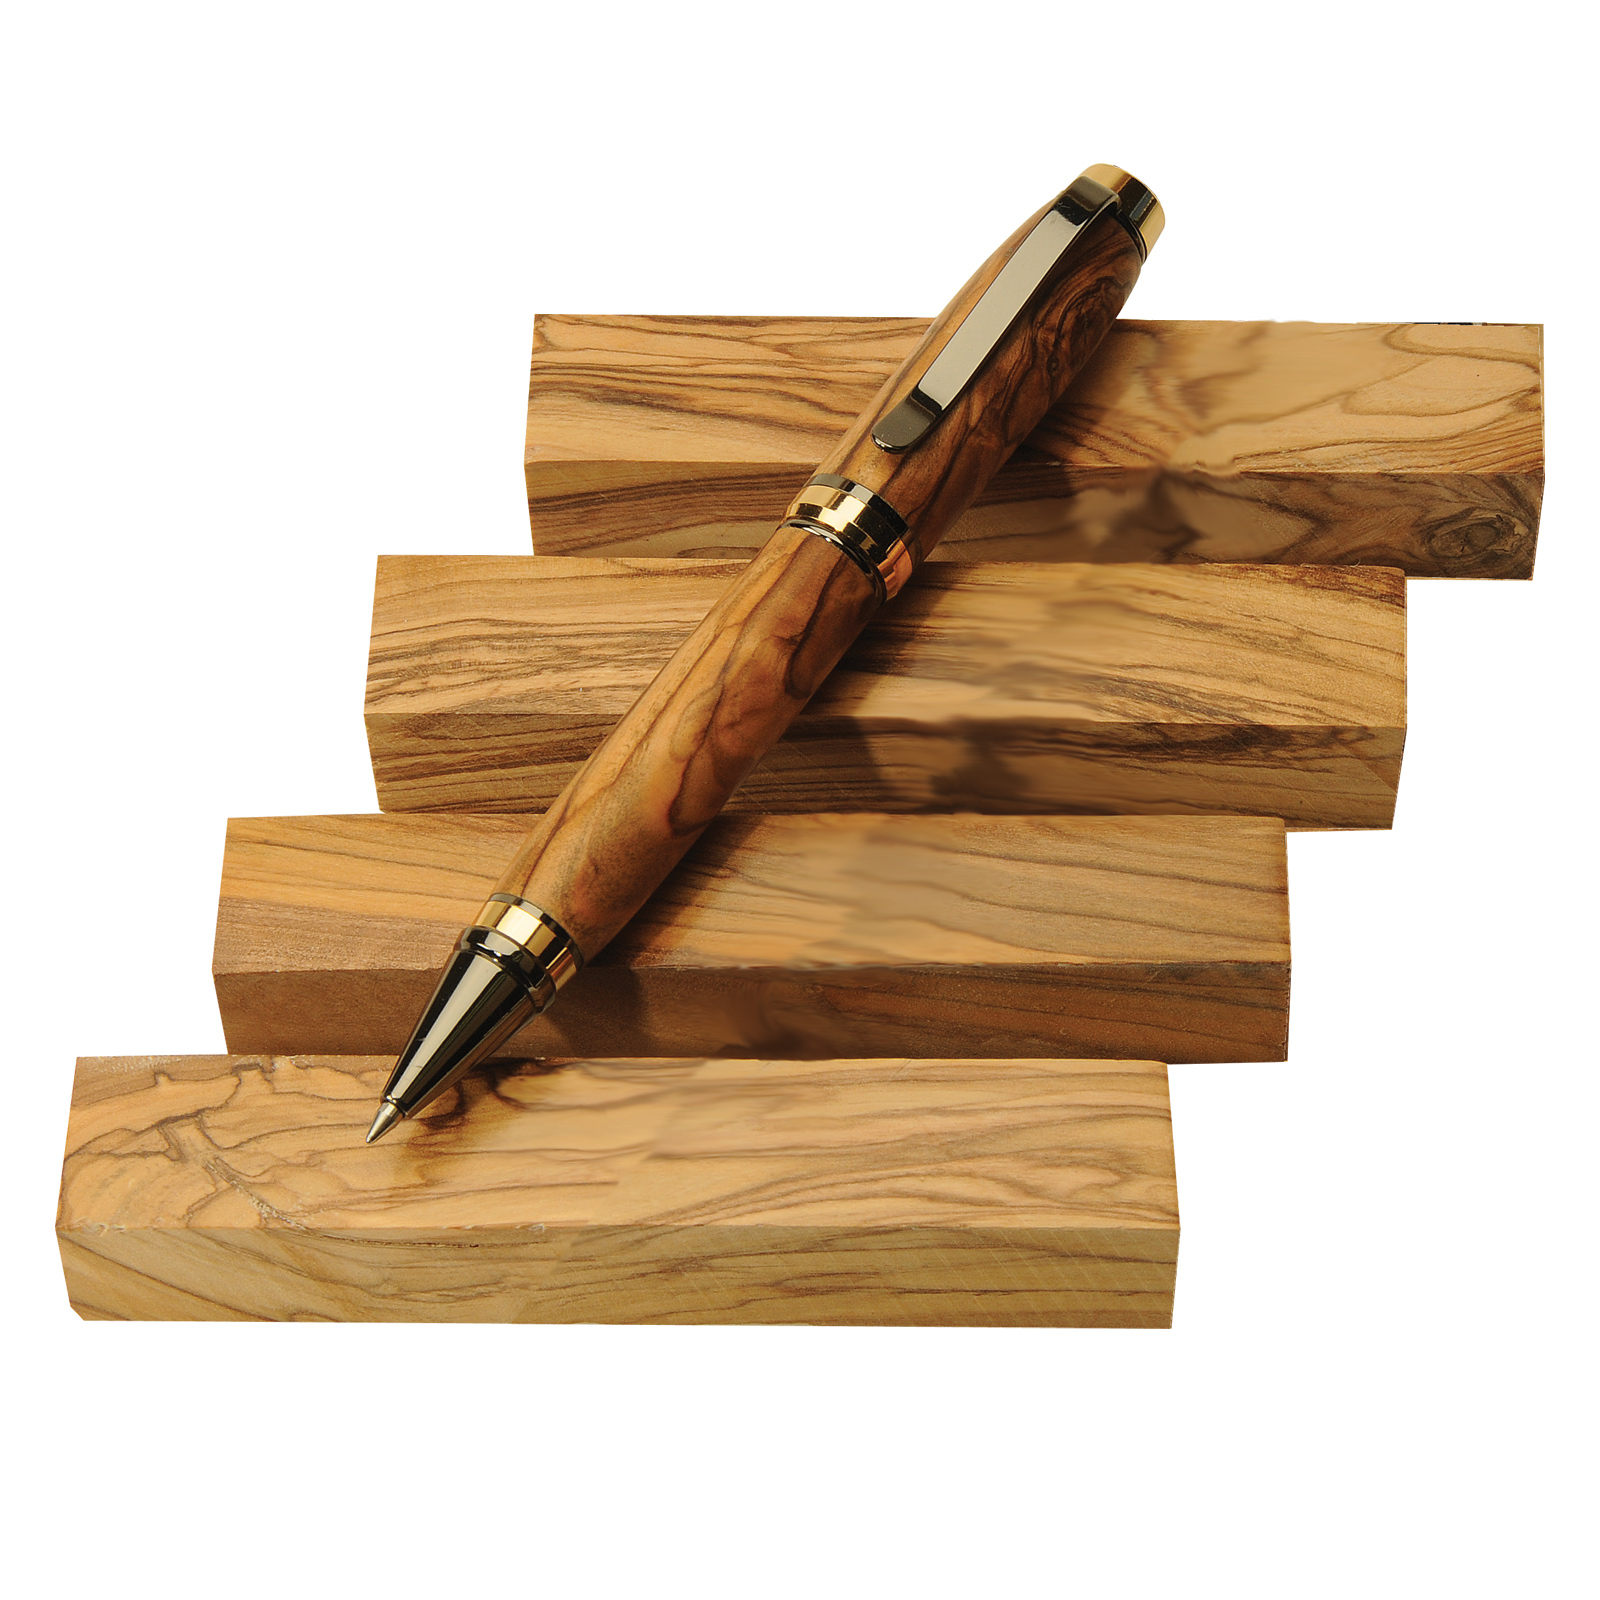 Unique Inlaid Wood Pen and Pencil Set